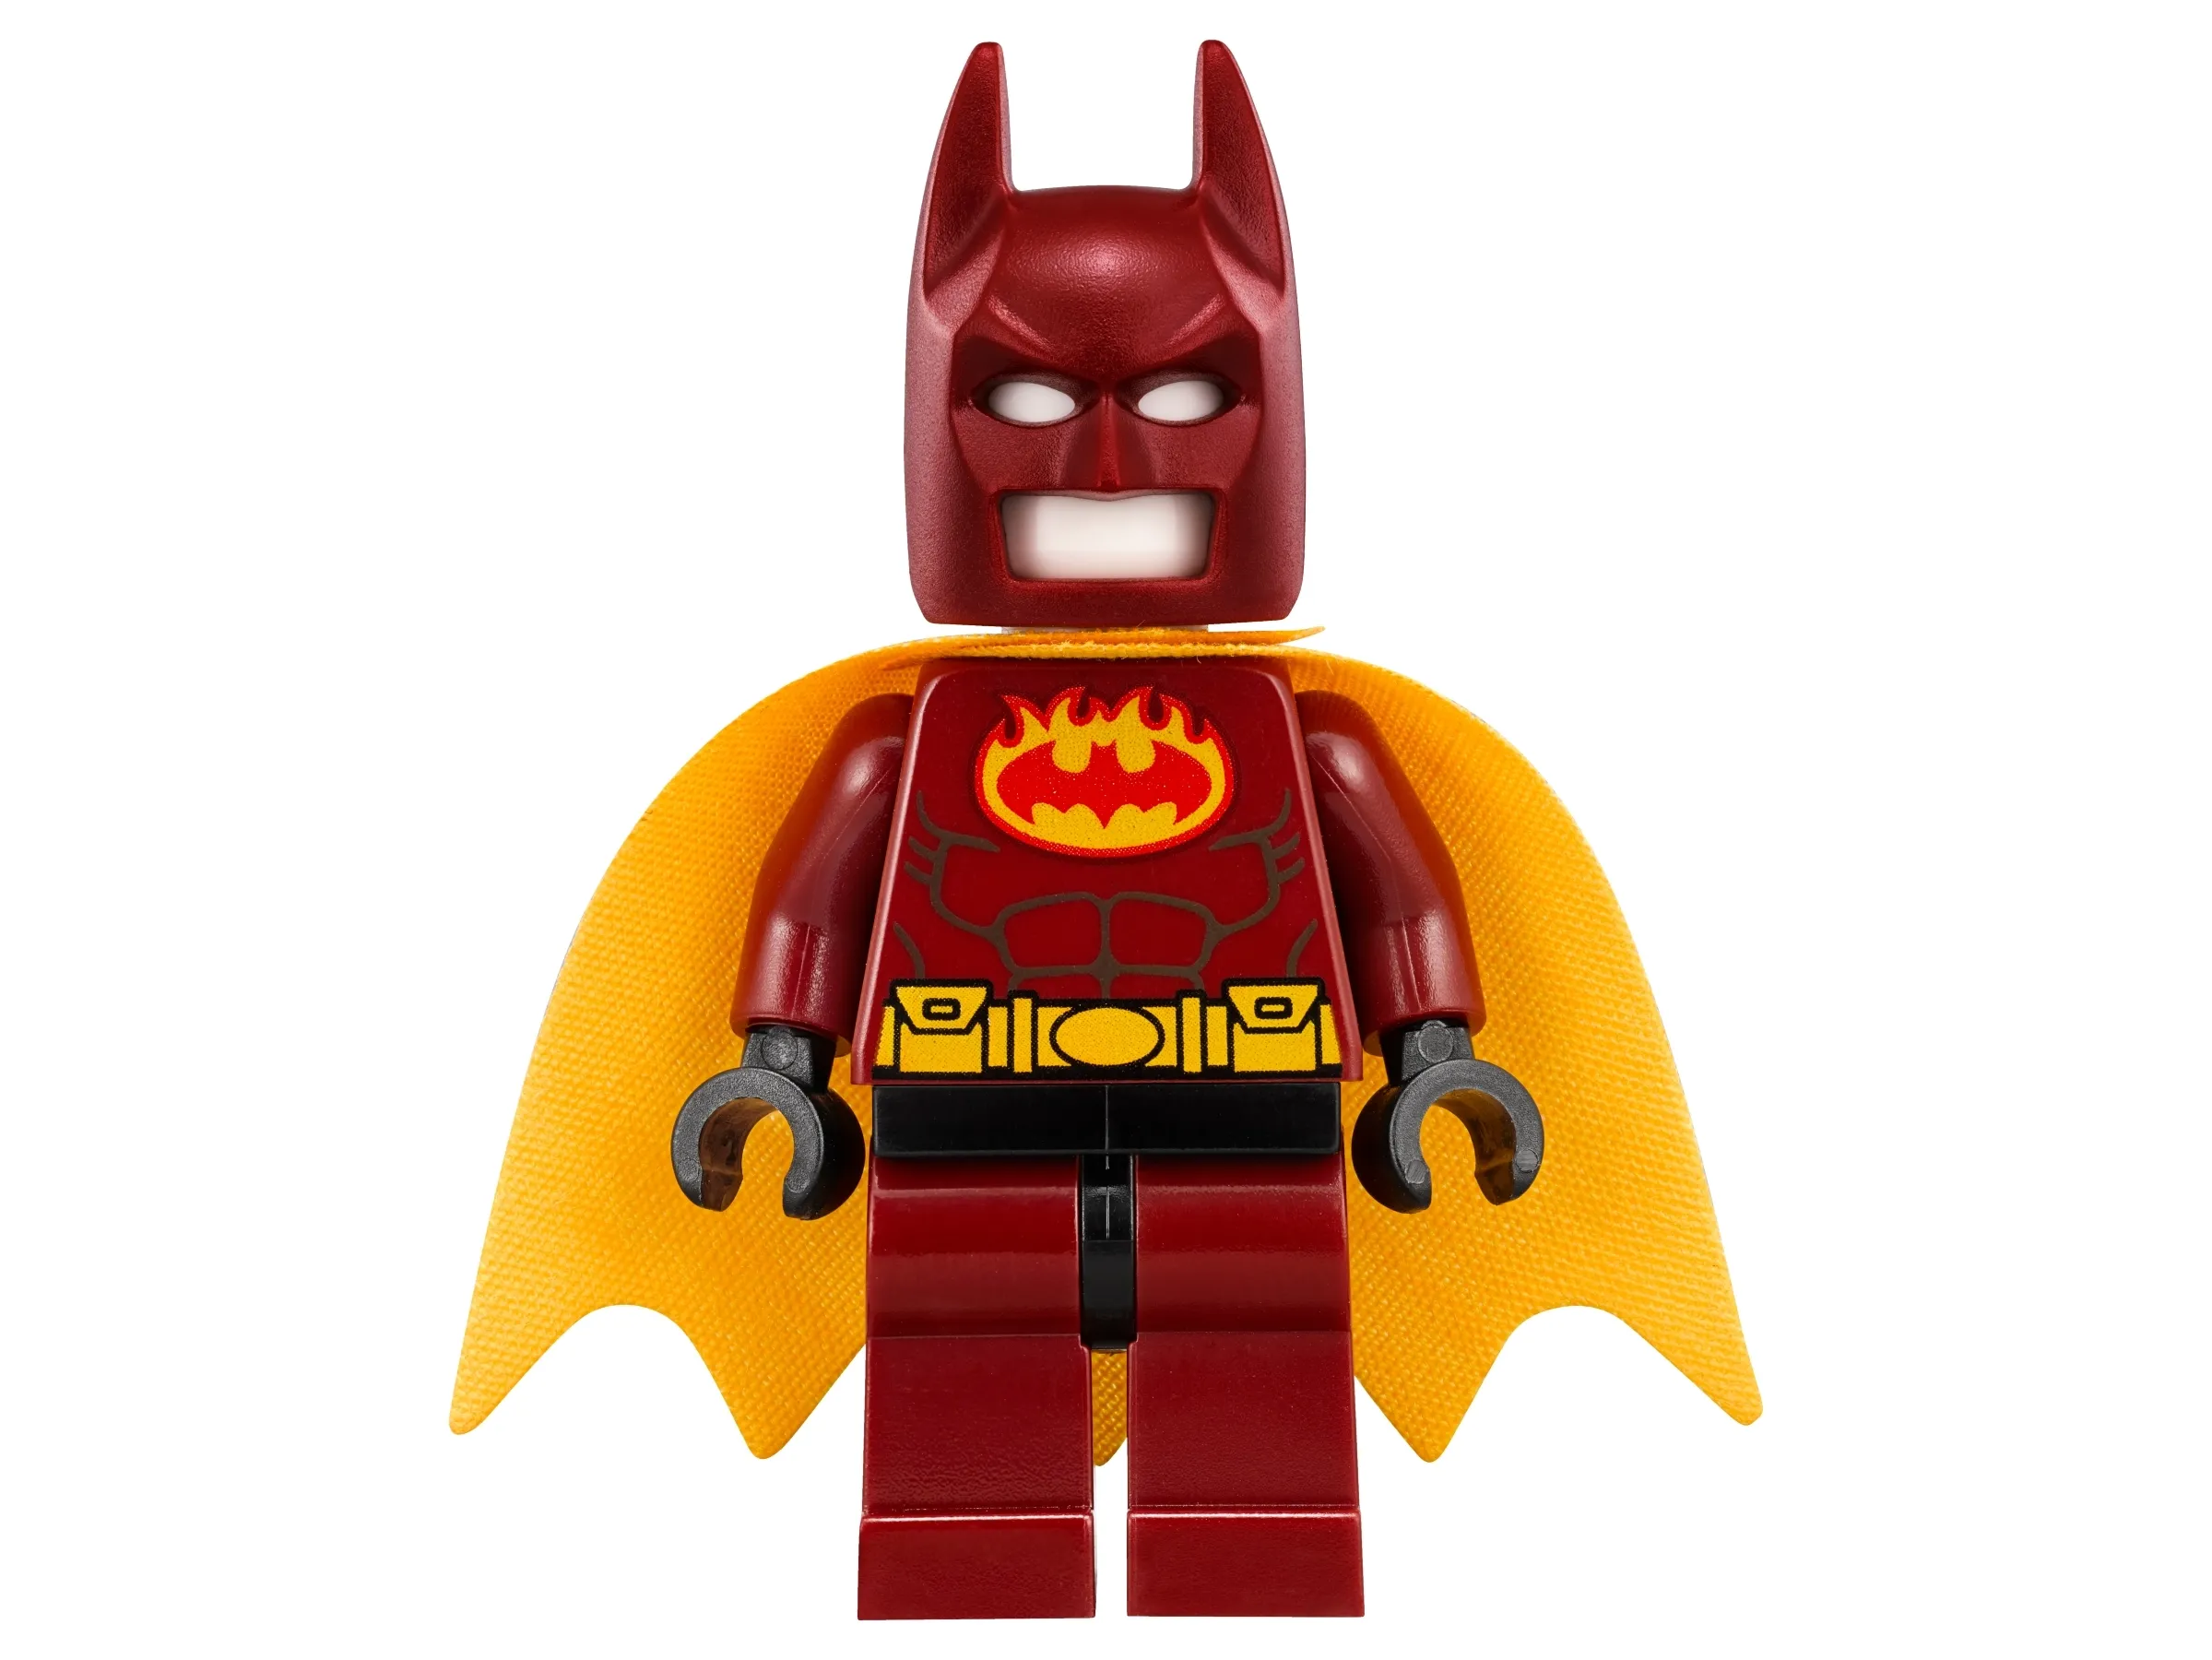 LEGO Batman - Minifig Weapon - Grapple Gun / Grappling Hook Gun - Black